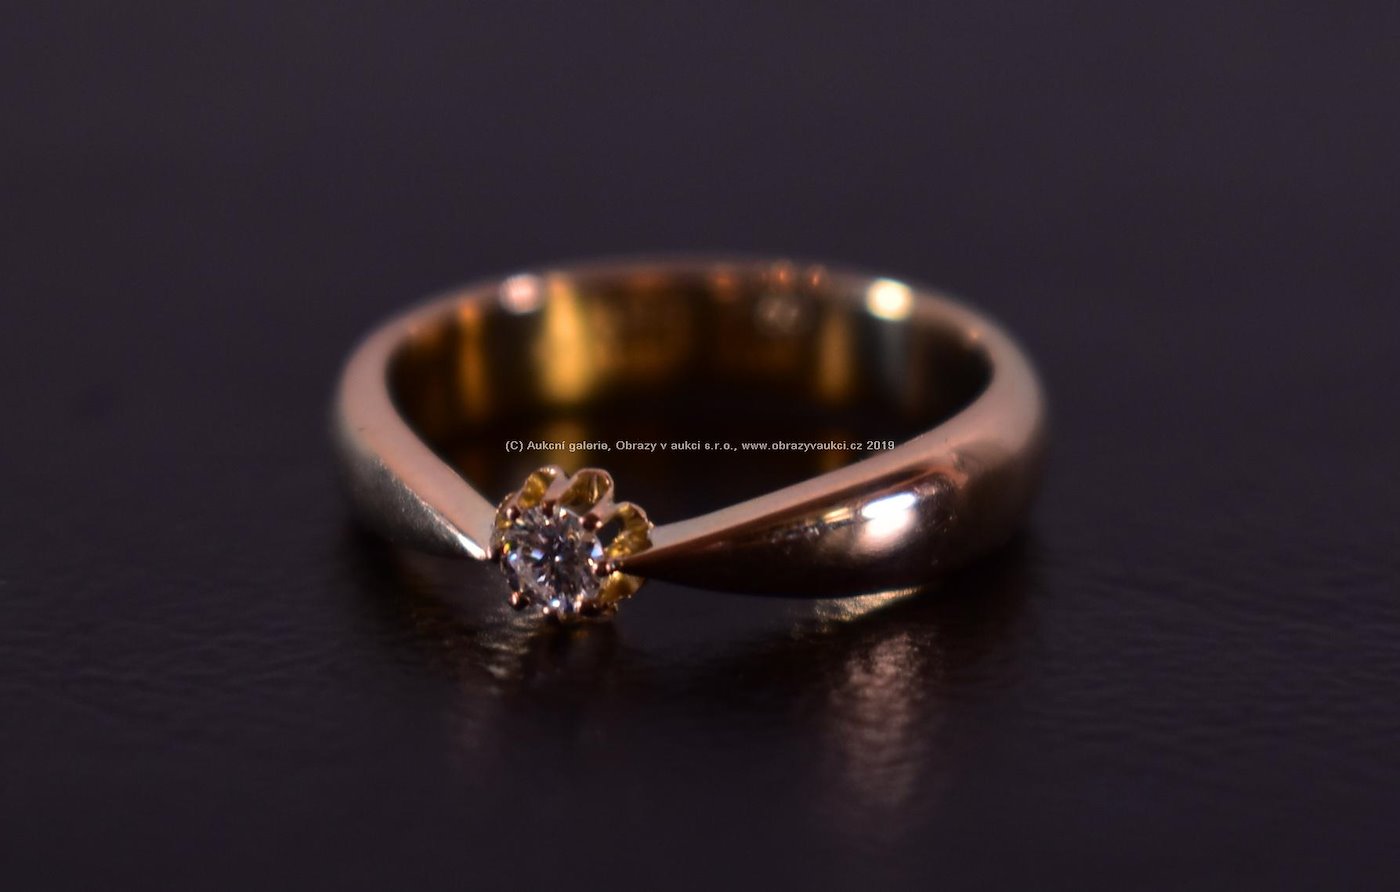 . - Briliantovaný prsten, zlato 585/1000, hrubá hmotnost 4g